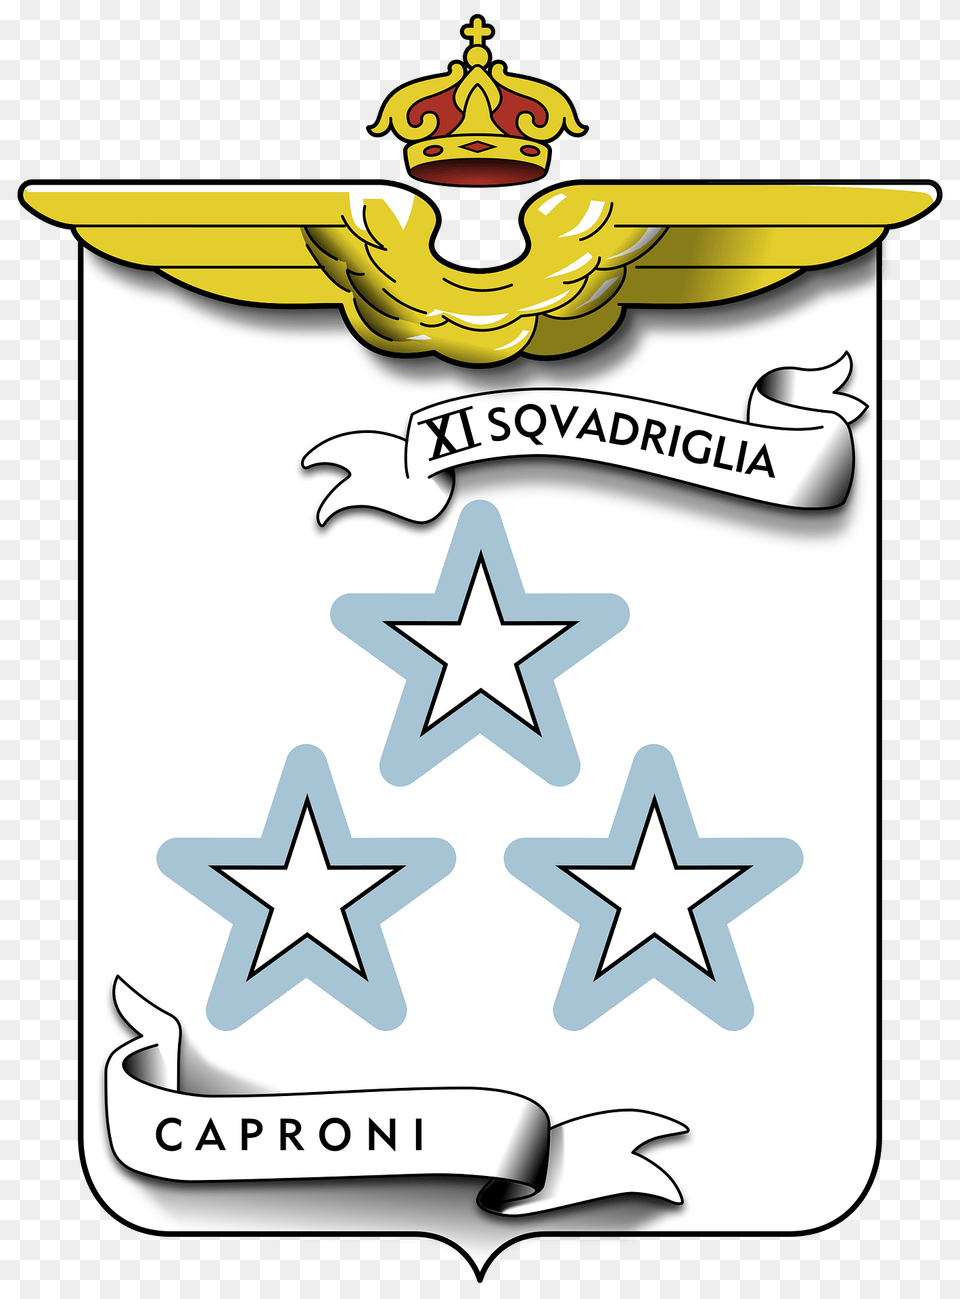 Coa Xi Squadriglia Caproni Clipart, Symbol, Star Symbol, Dynamite, Weapon Png Image